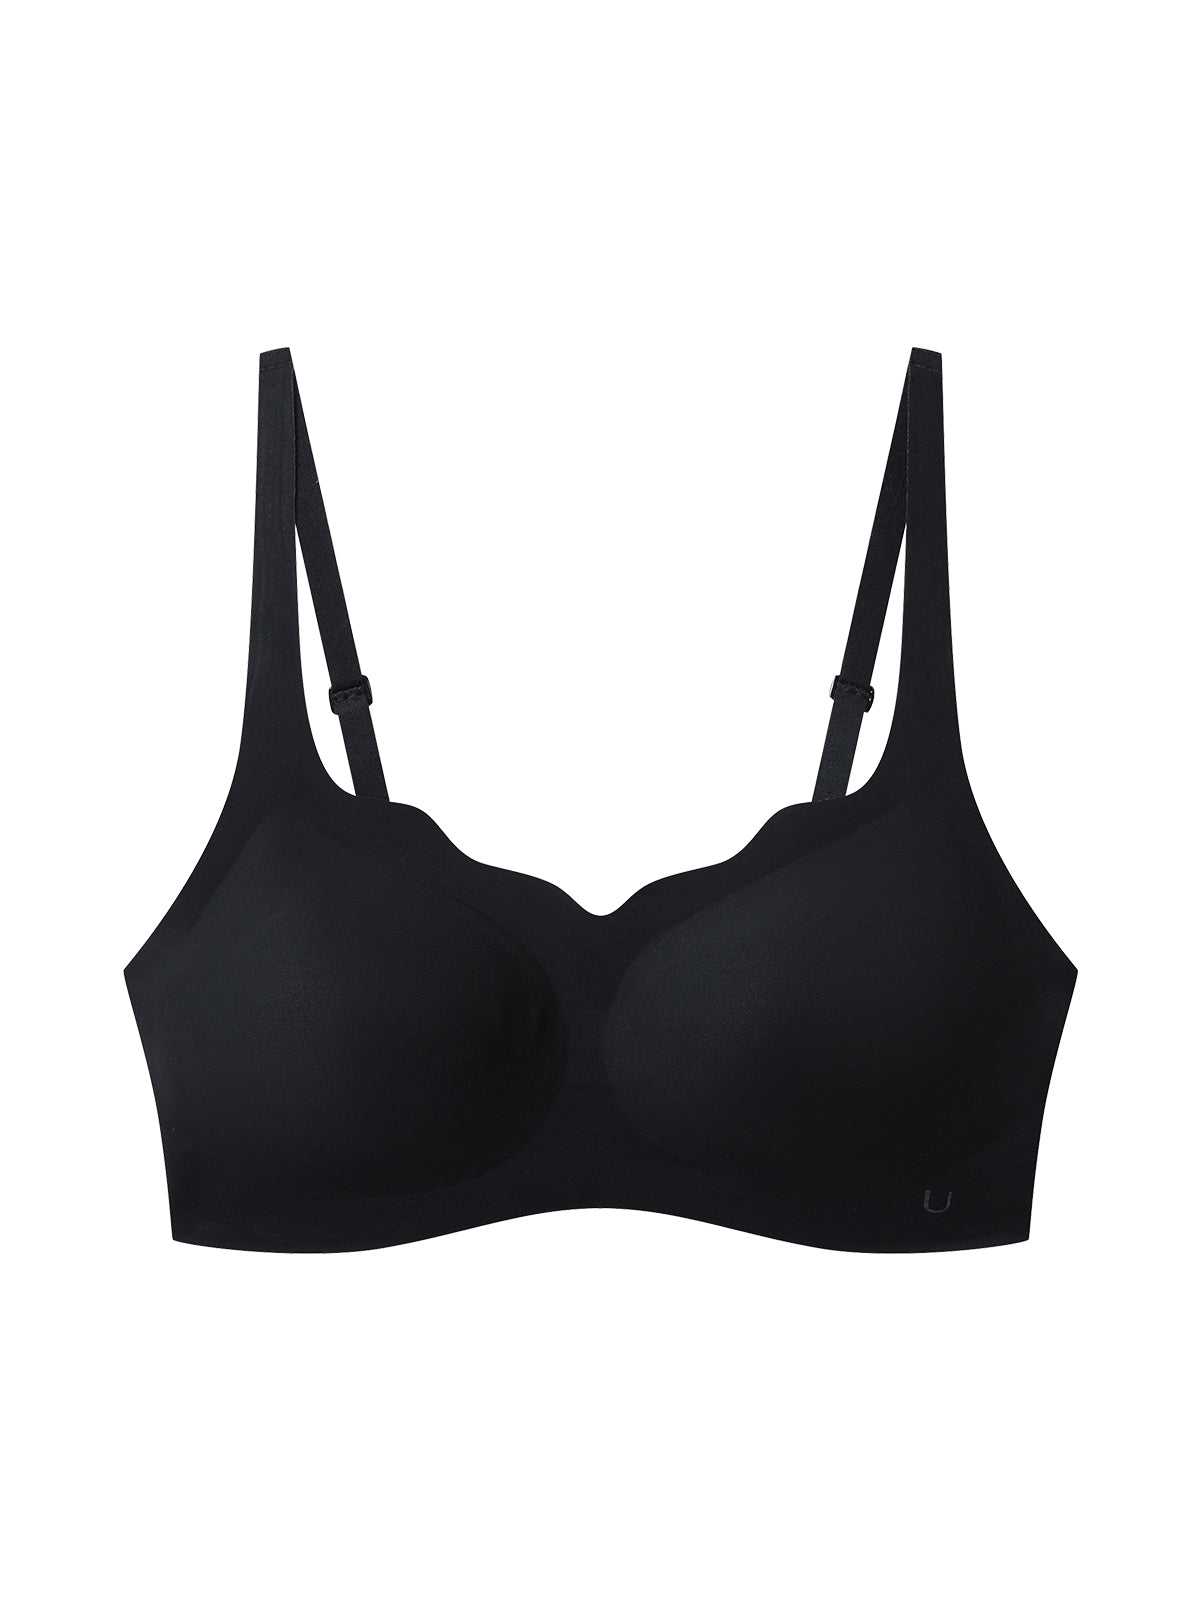 Wacoal Smart Size Bra, wireless bra, easy to choose, comfortable to wear,  model WB5X49, black (BL)